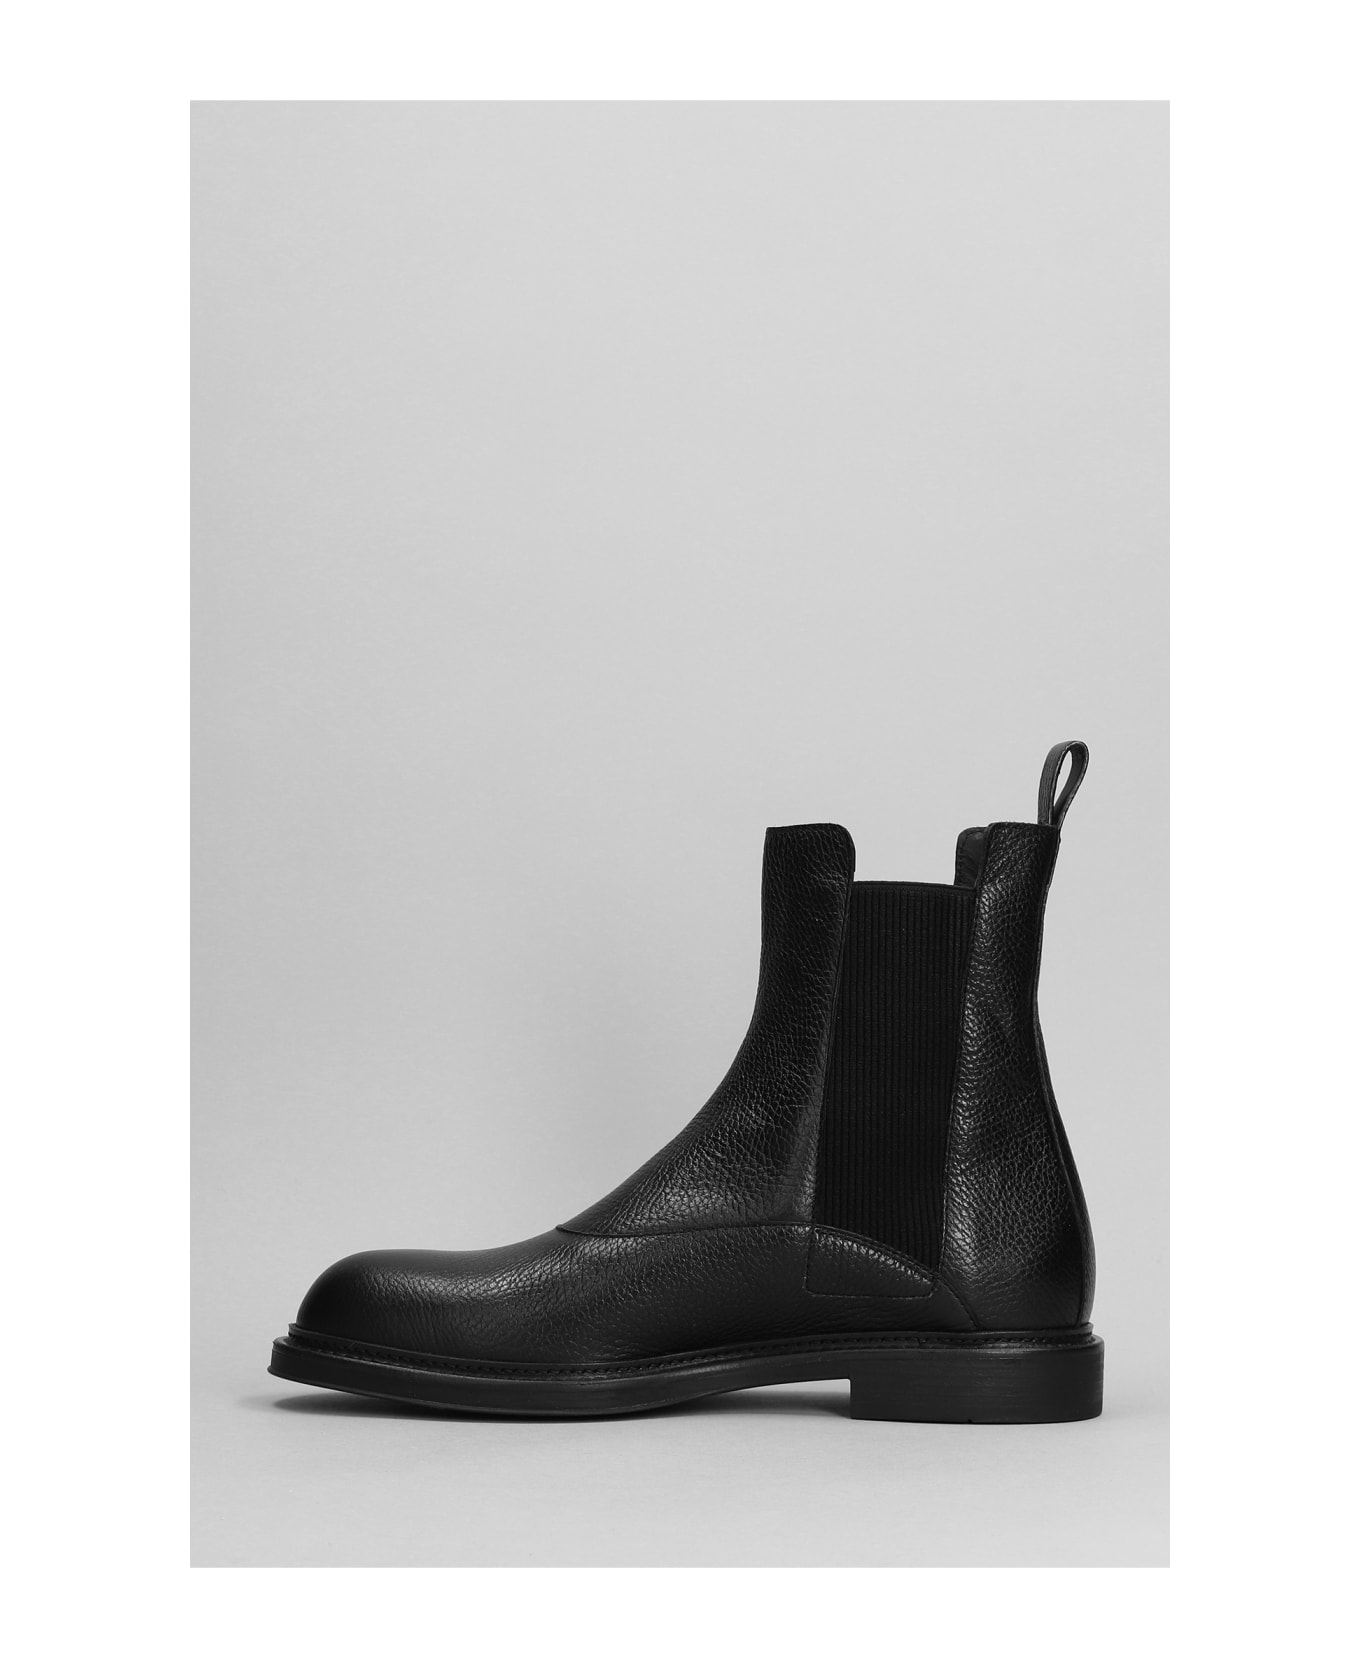 Emporio Armani Ankle Boots In Black Leather - black ブーツ